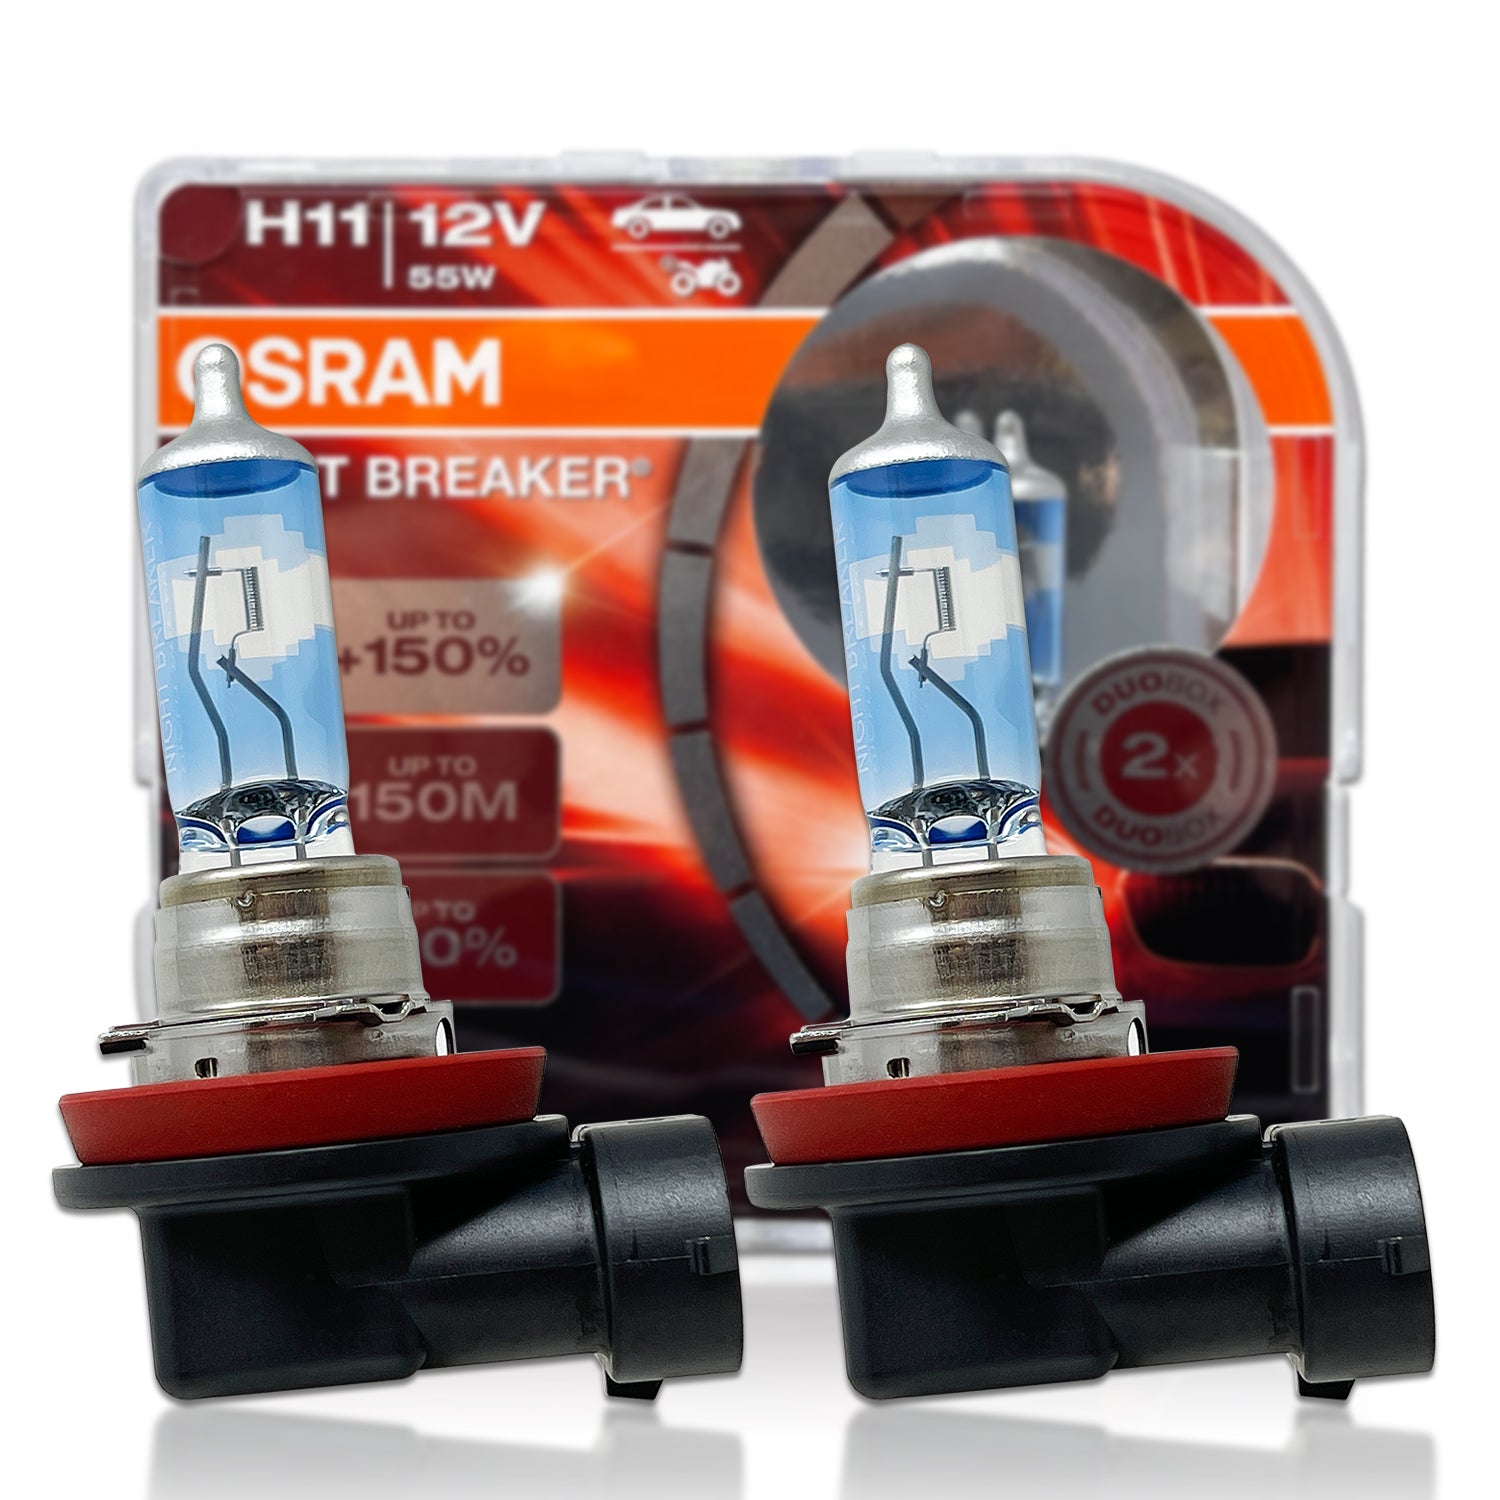 2 Ampoules OSRAM H7 Night Breaker® 200 12V - Roady